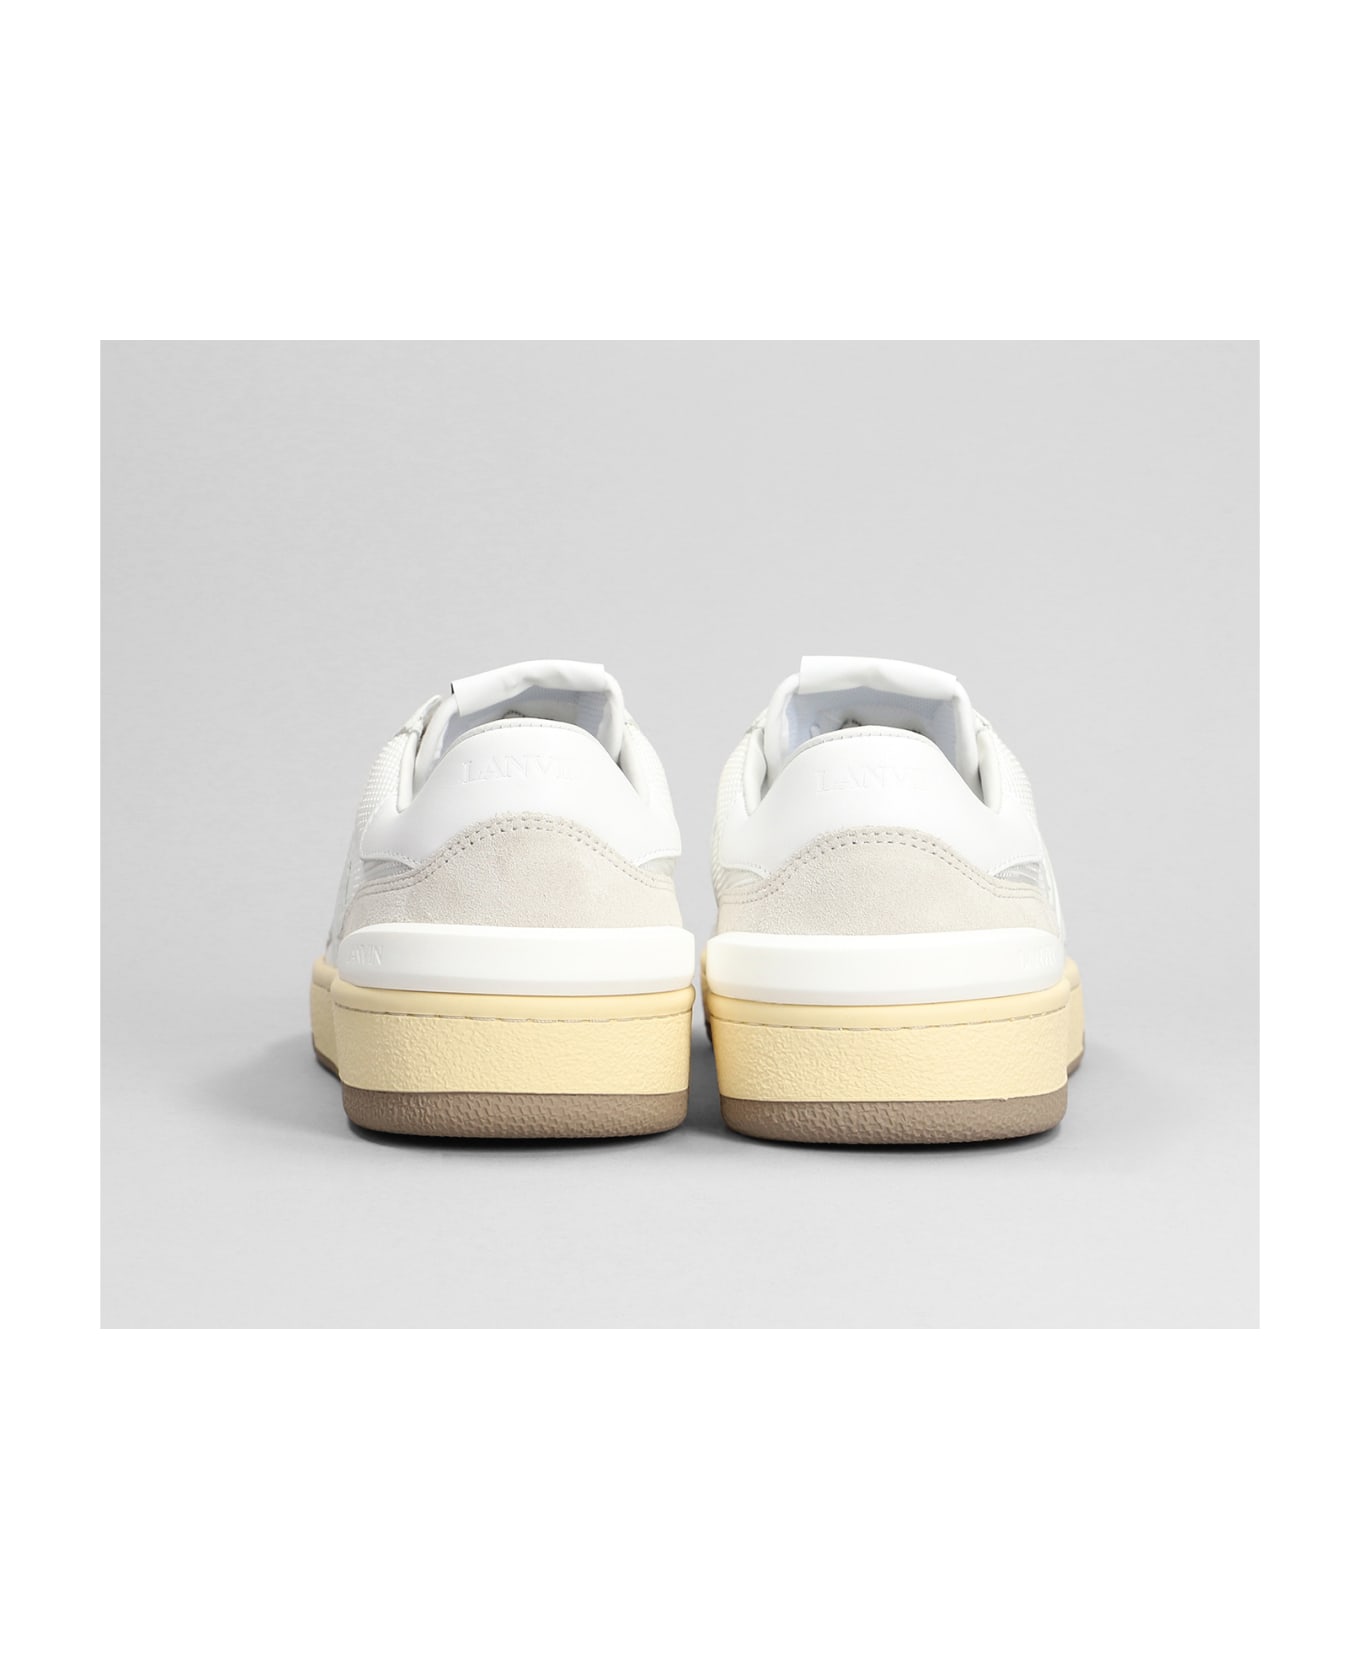 Lanvin Sneakers - White スニーカー